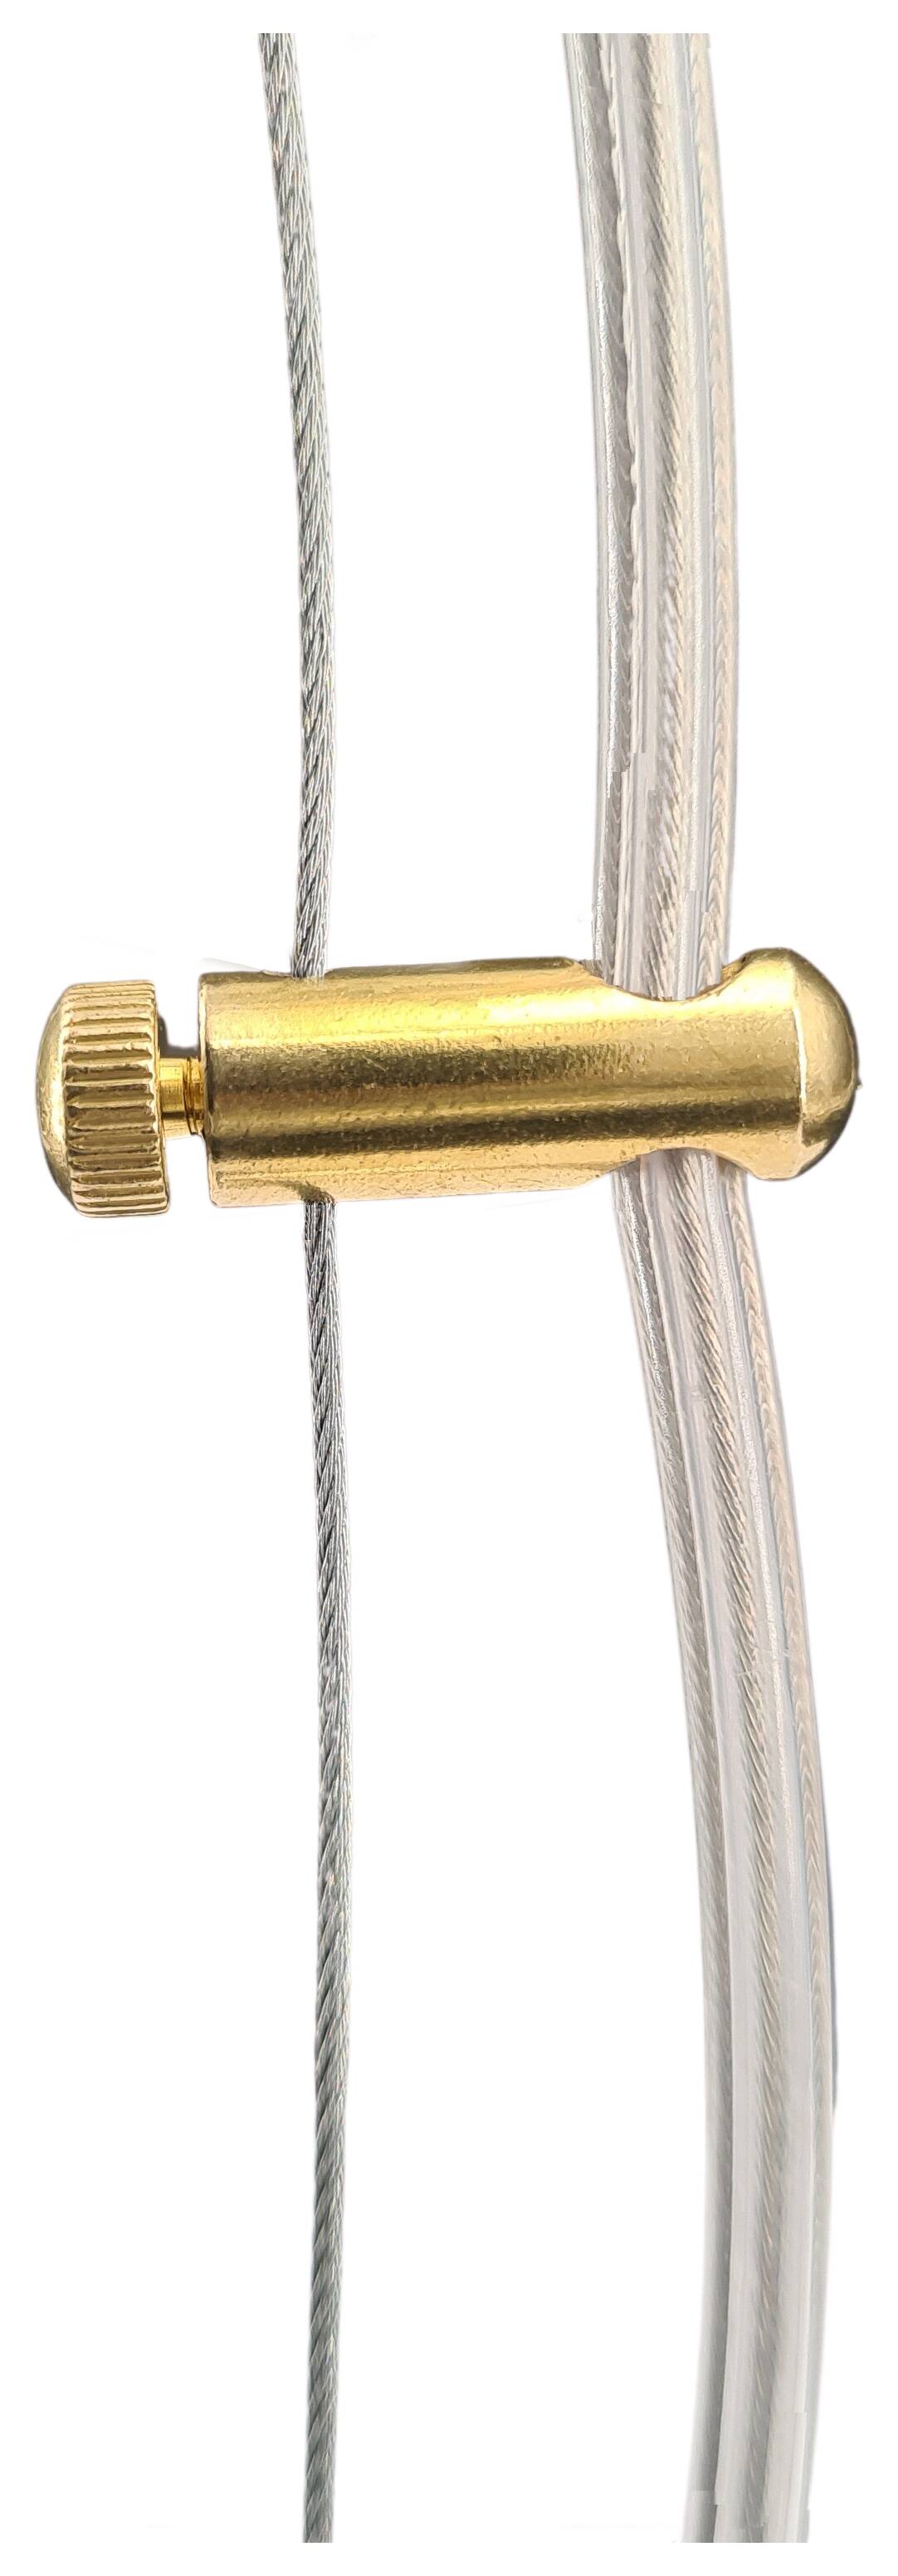 cable blocker / gripper 9x25 with 1 lock screw hole 1x 2 mm + 1x 6,5 mm raw